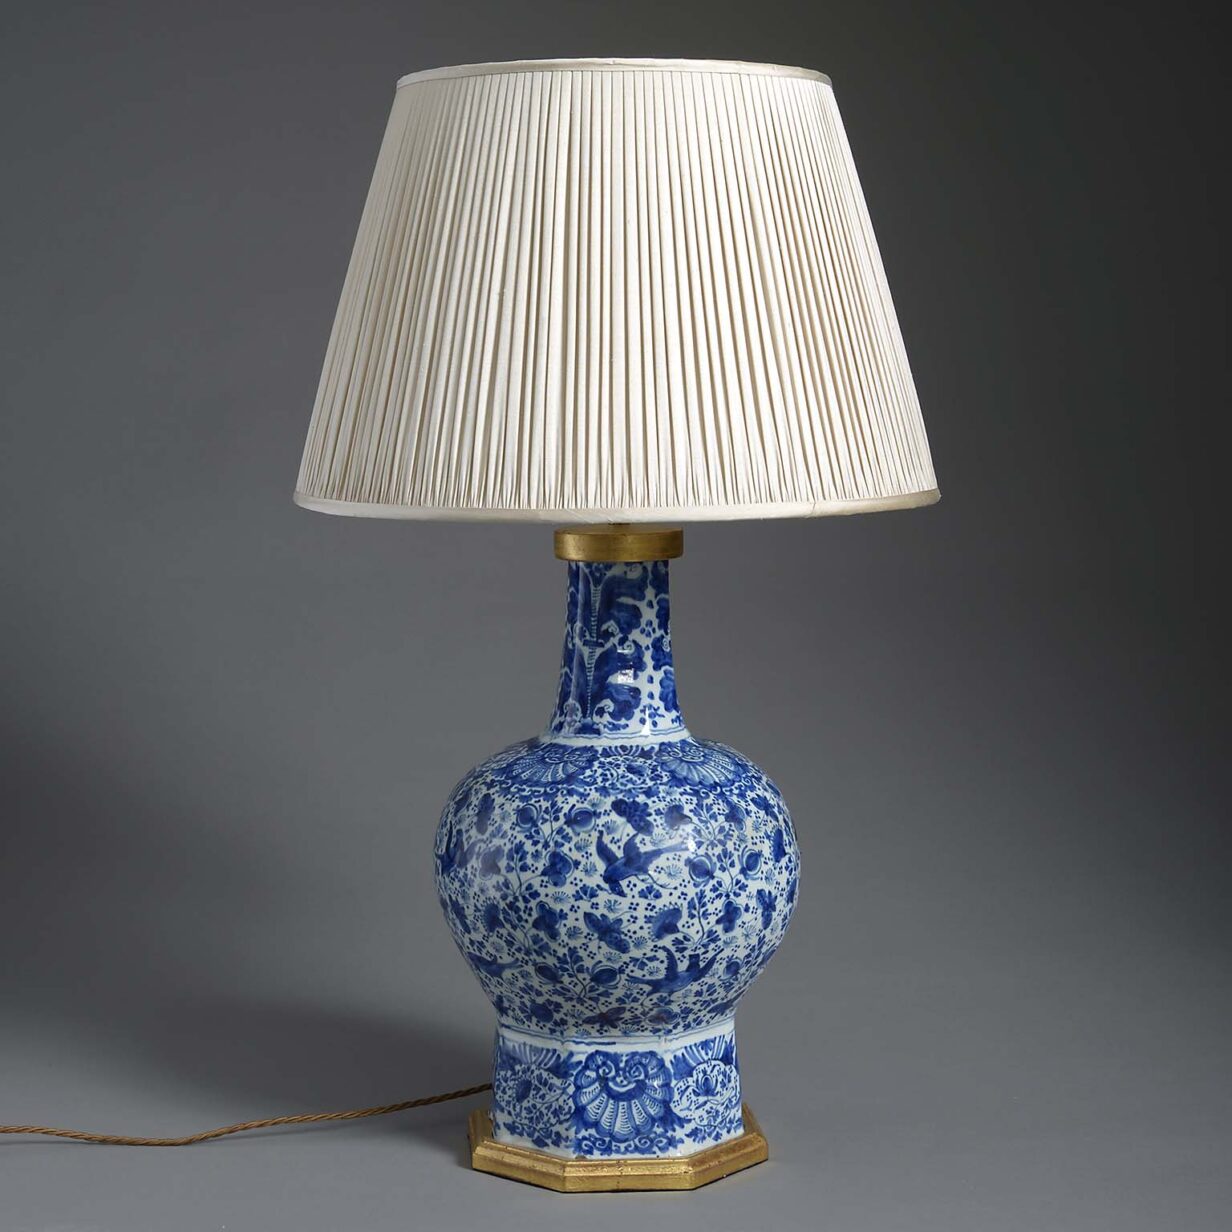 Delft lamp base